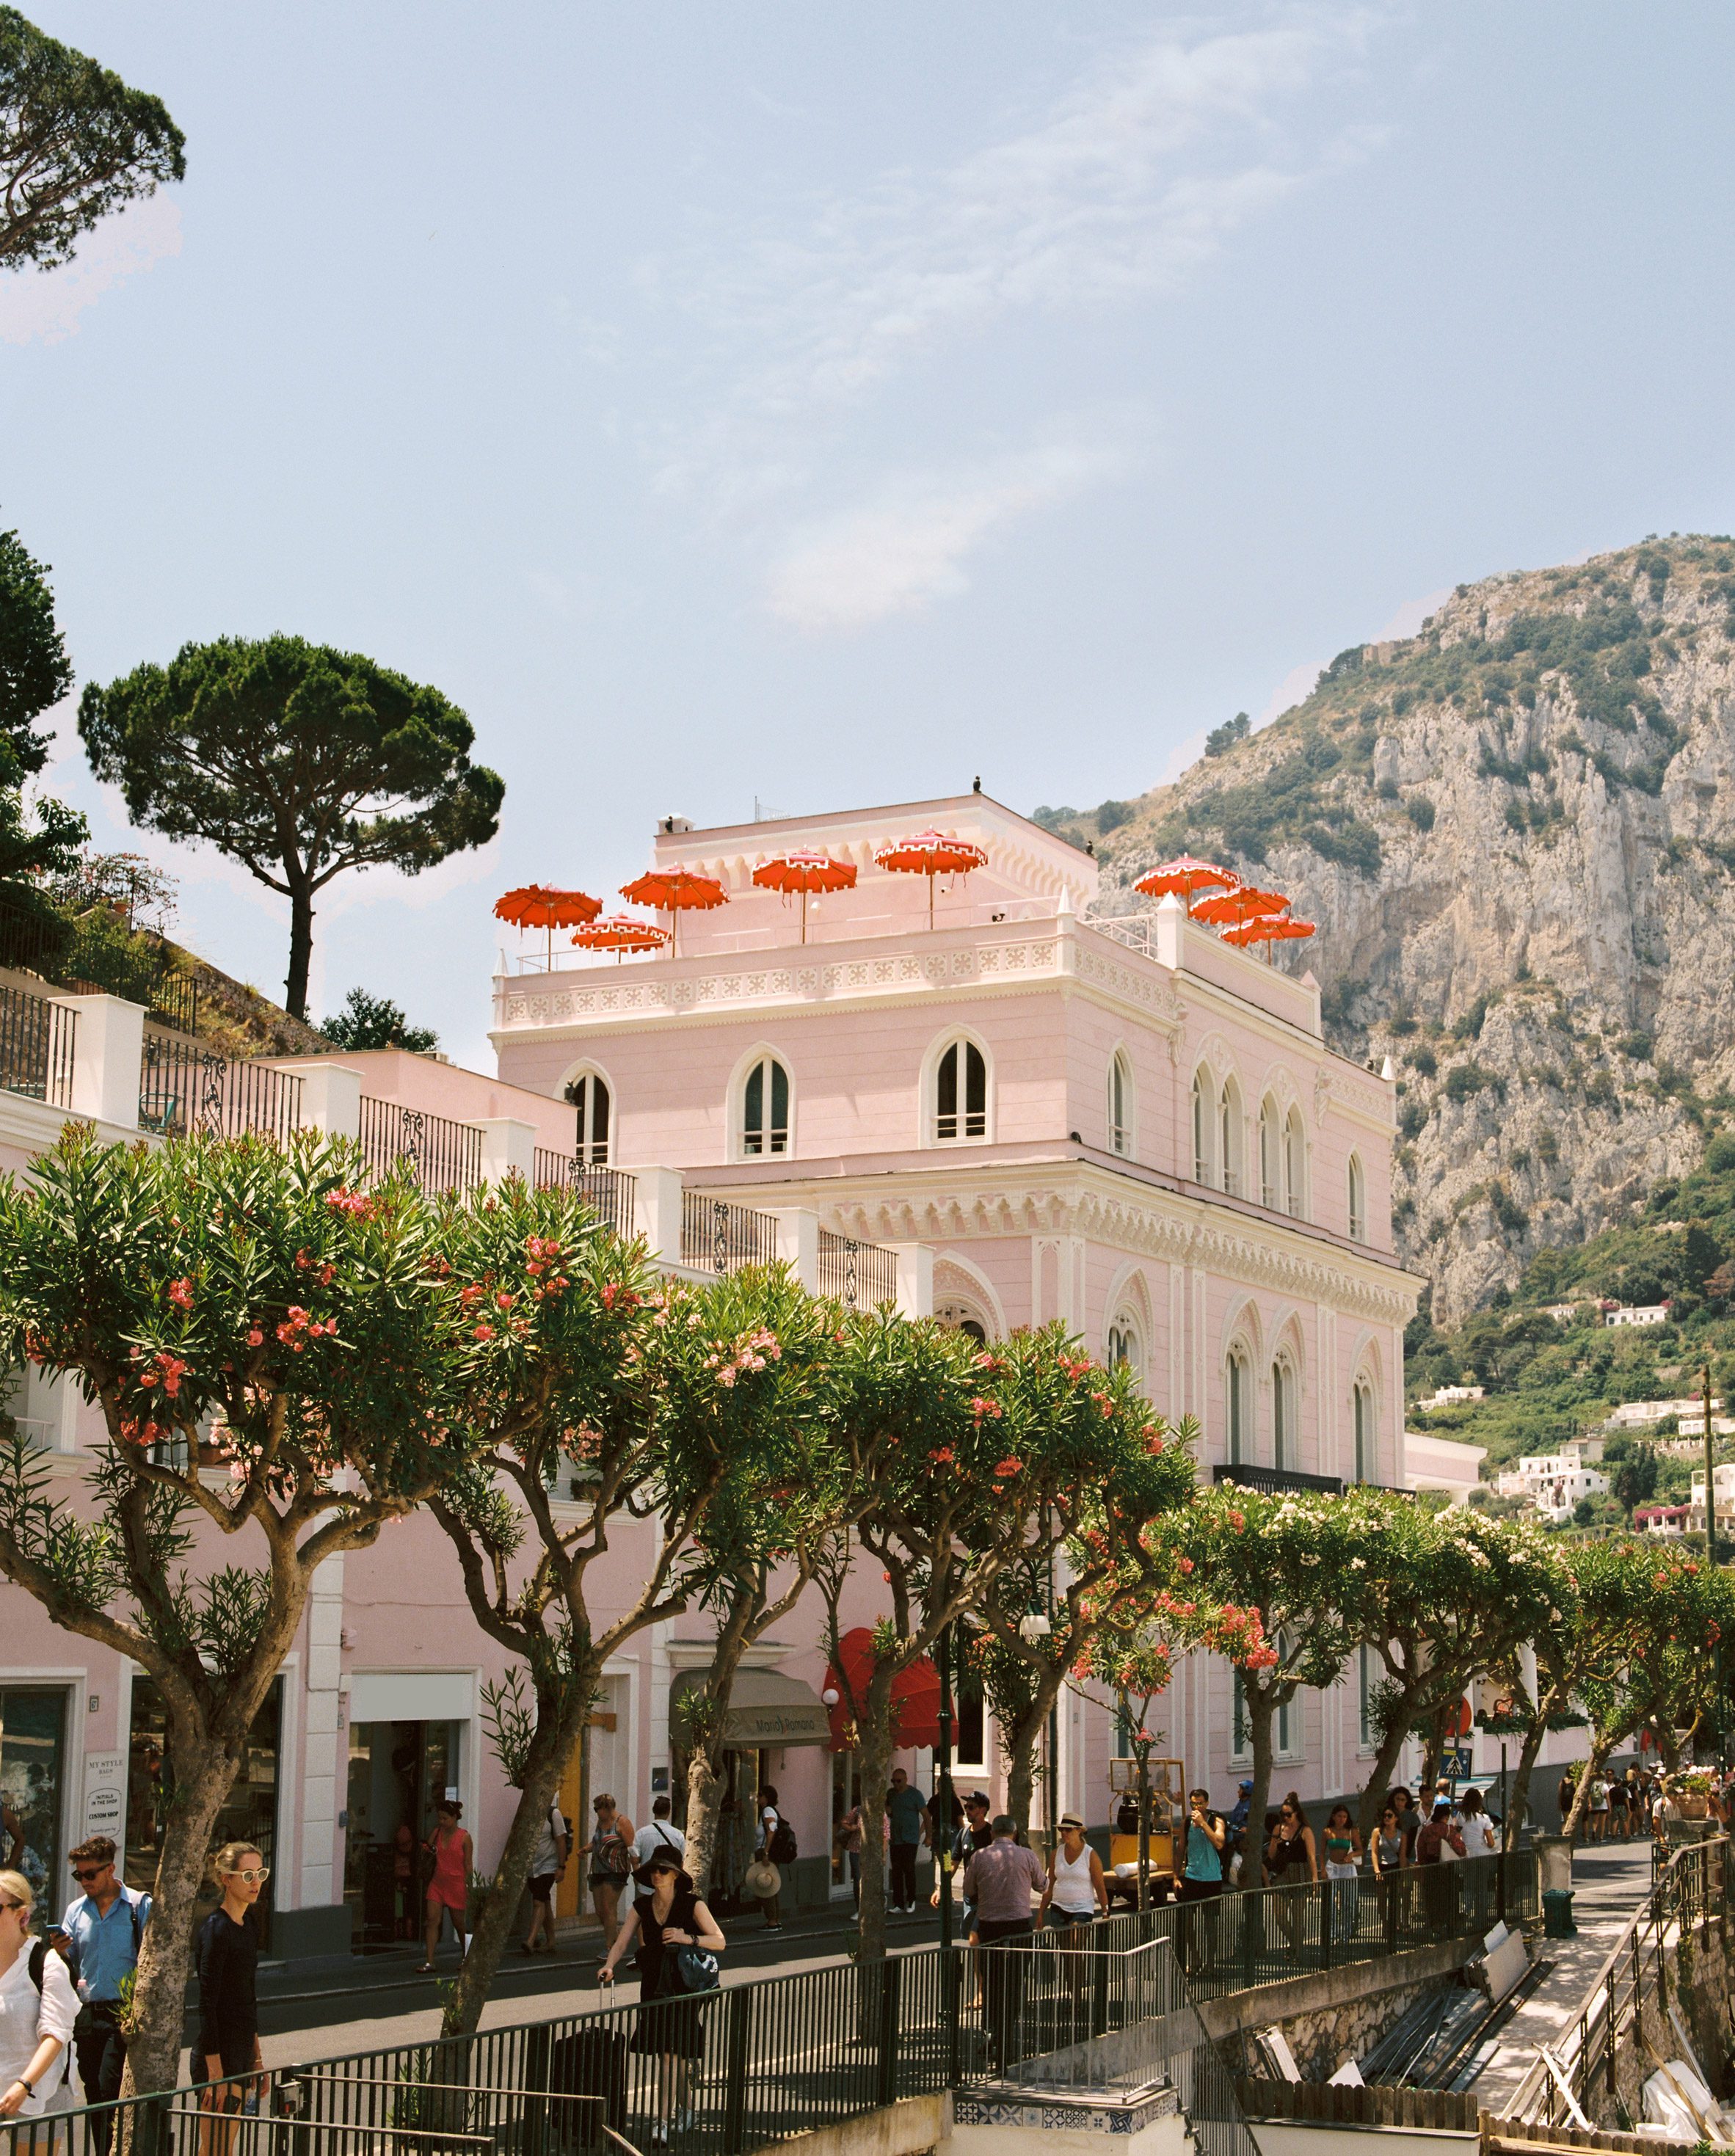 Il Capri酒店接受Graziella Buontempo和Arnaud Lacombe的粉红色改造|ART-Arrakis | 建筑室内设计的创新与灵感